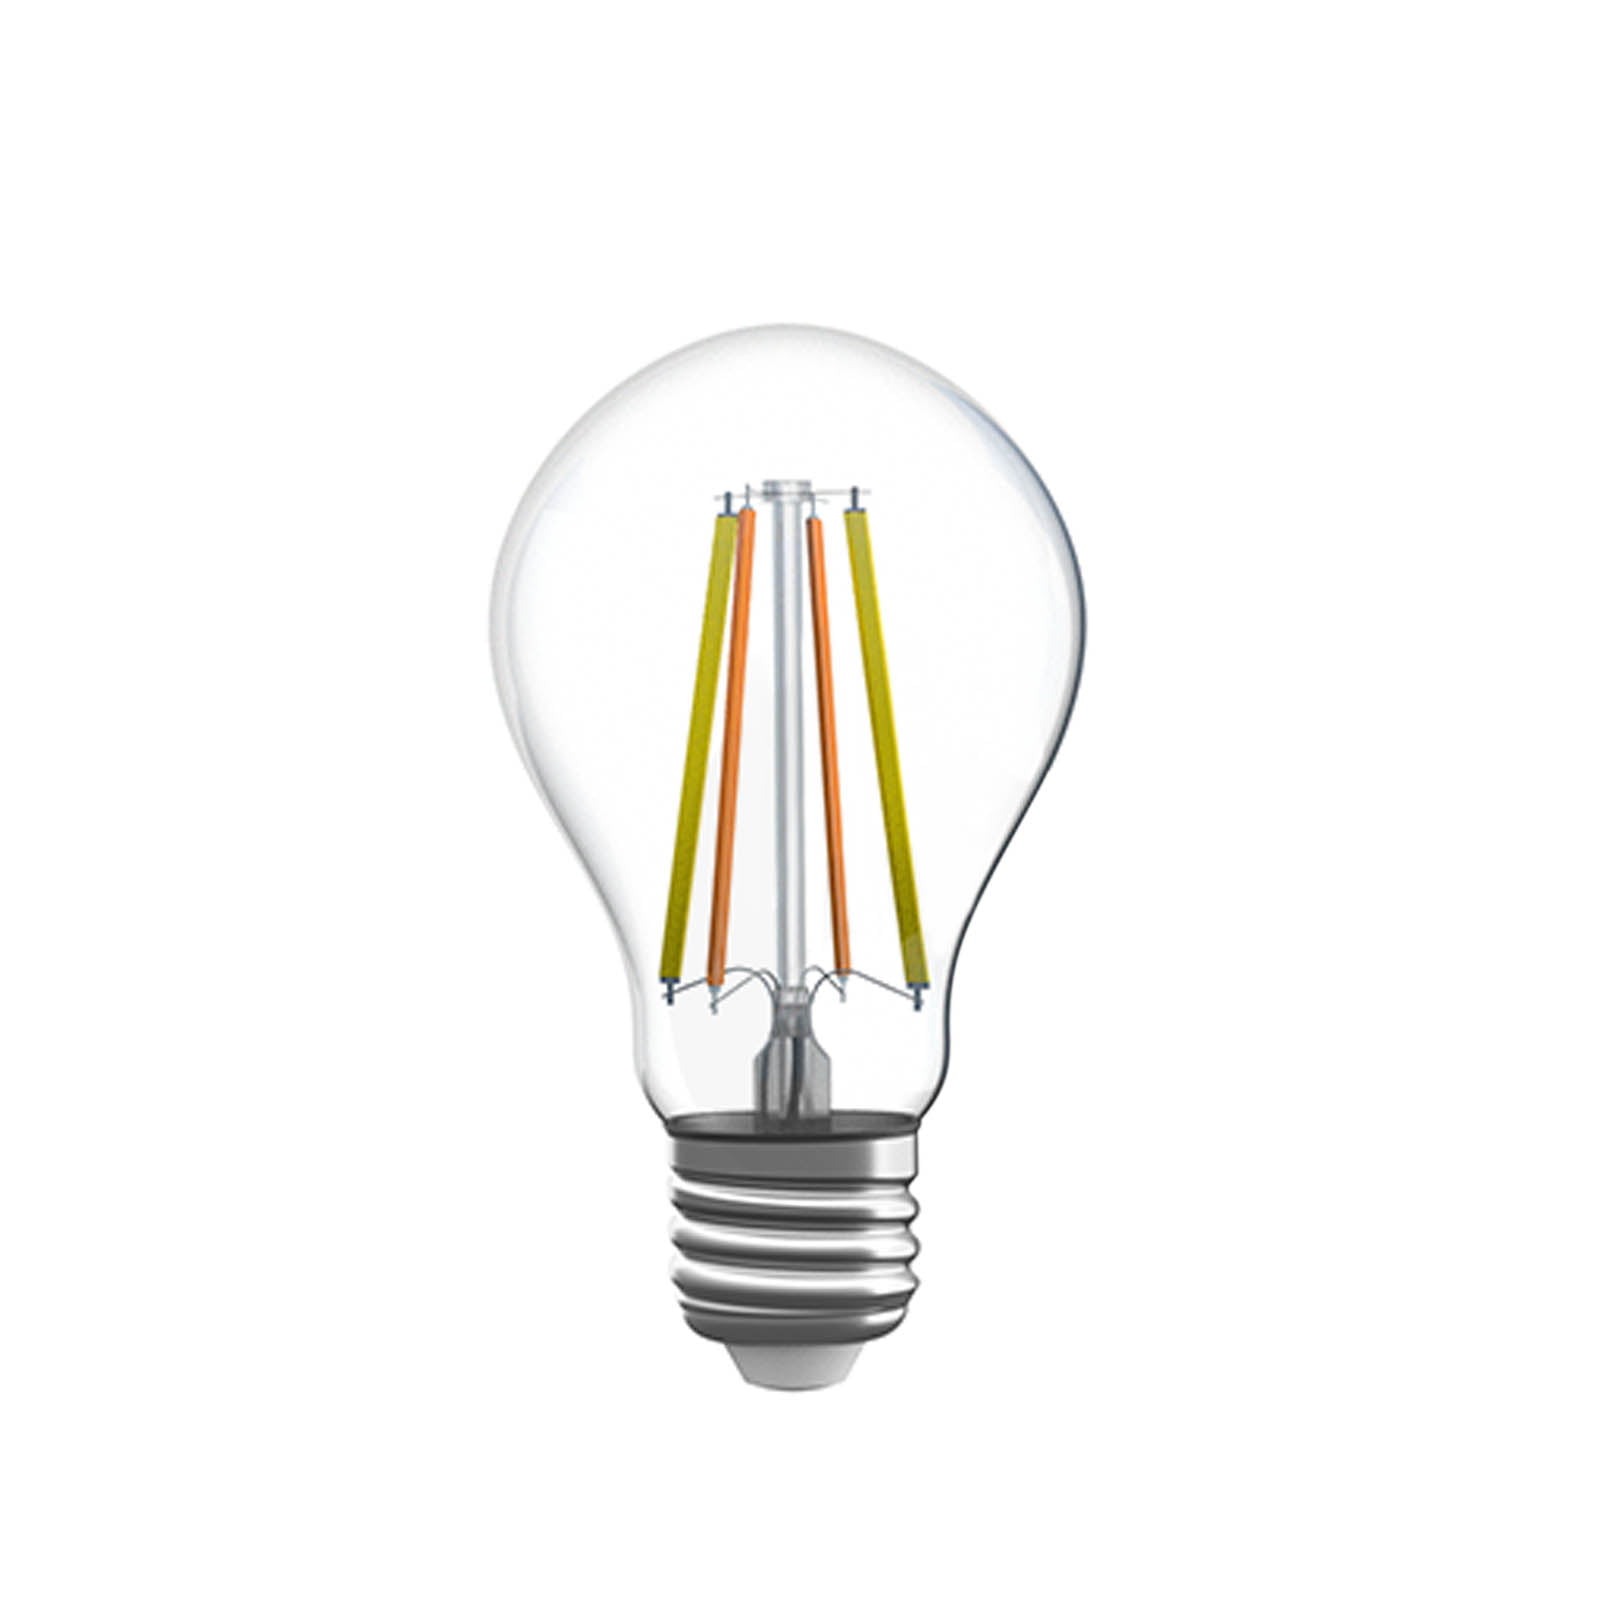 HOROZ Longlife LED 15W Daylight 6400k Bulb Lamp Globe E27 Edison Screw A60